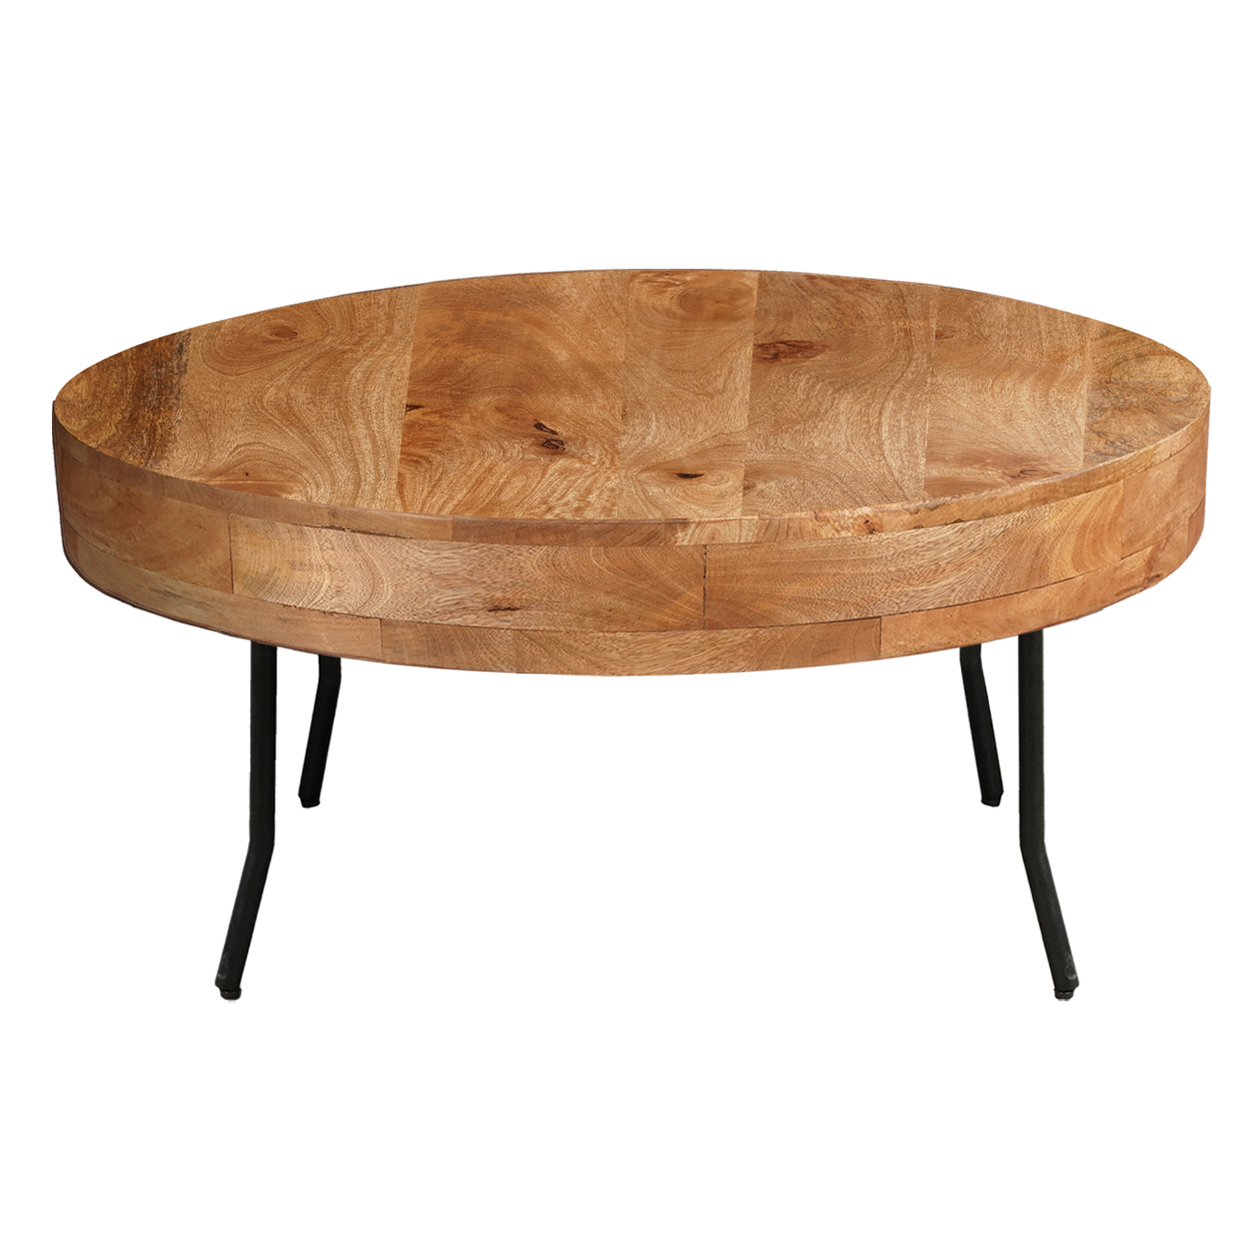 32 Inch Coffee Table, Handcrafted Mango Wood Round Top, Black Metal Angled Legs - Saltoro Sherpi